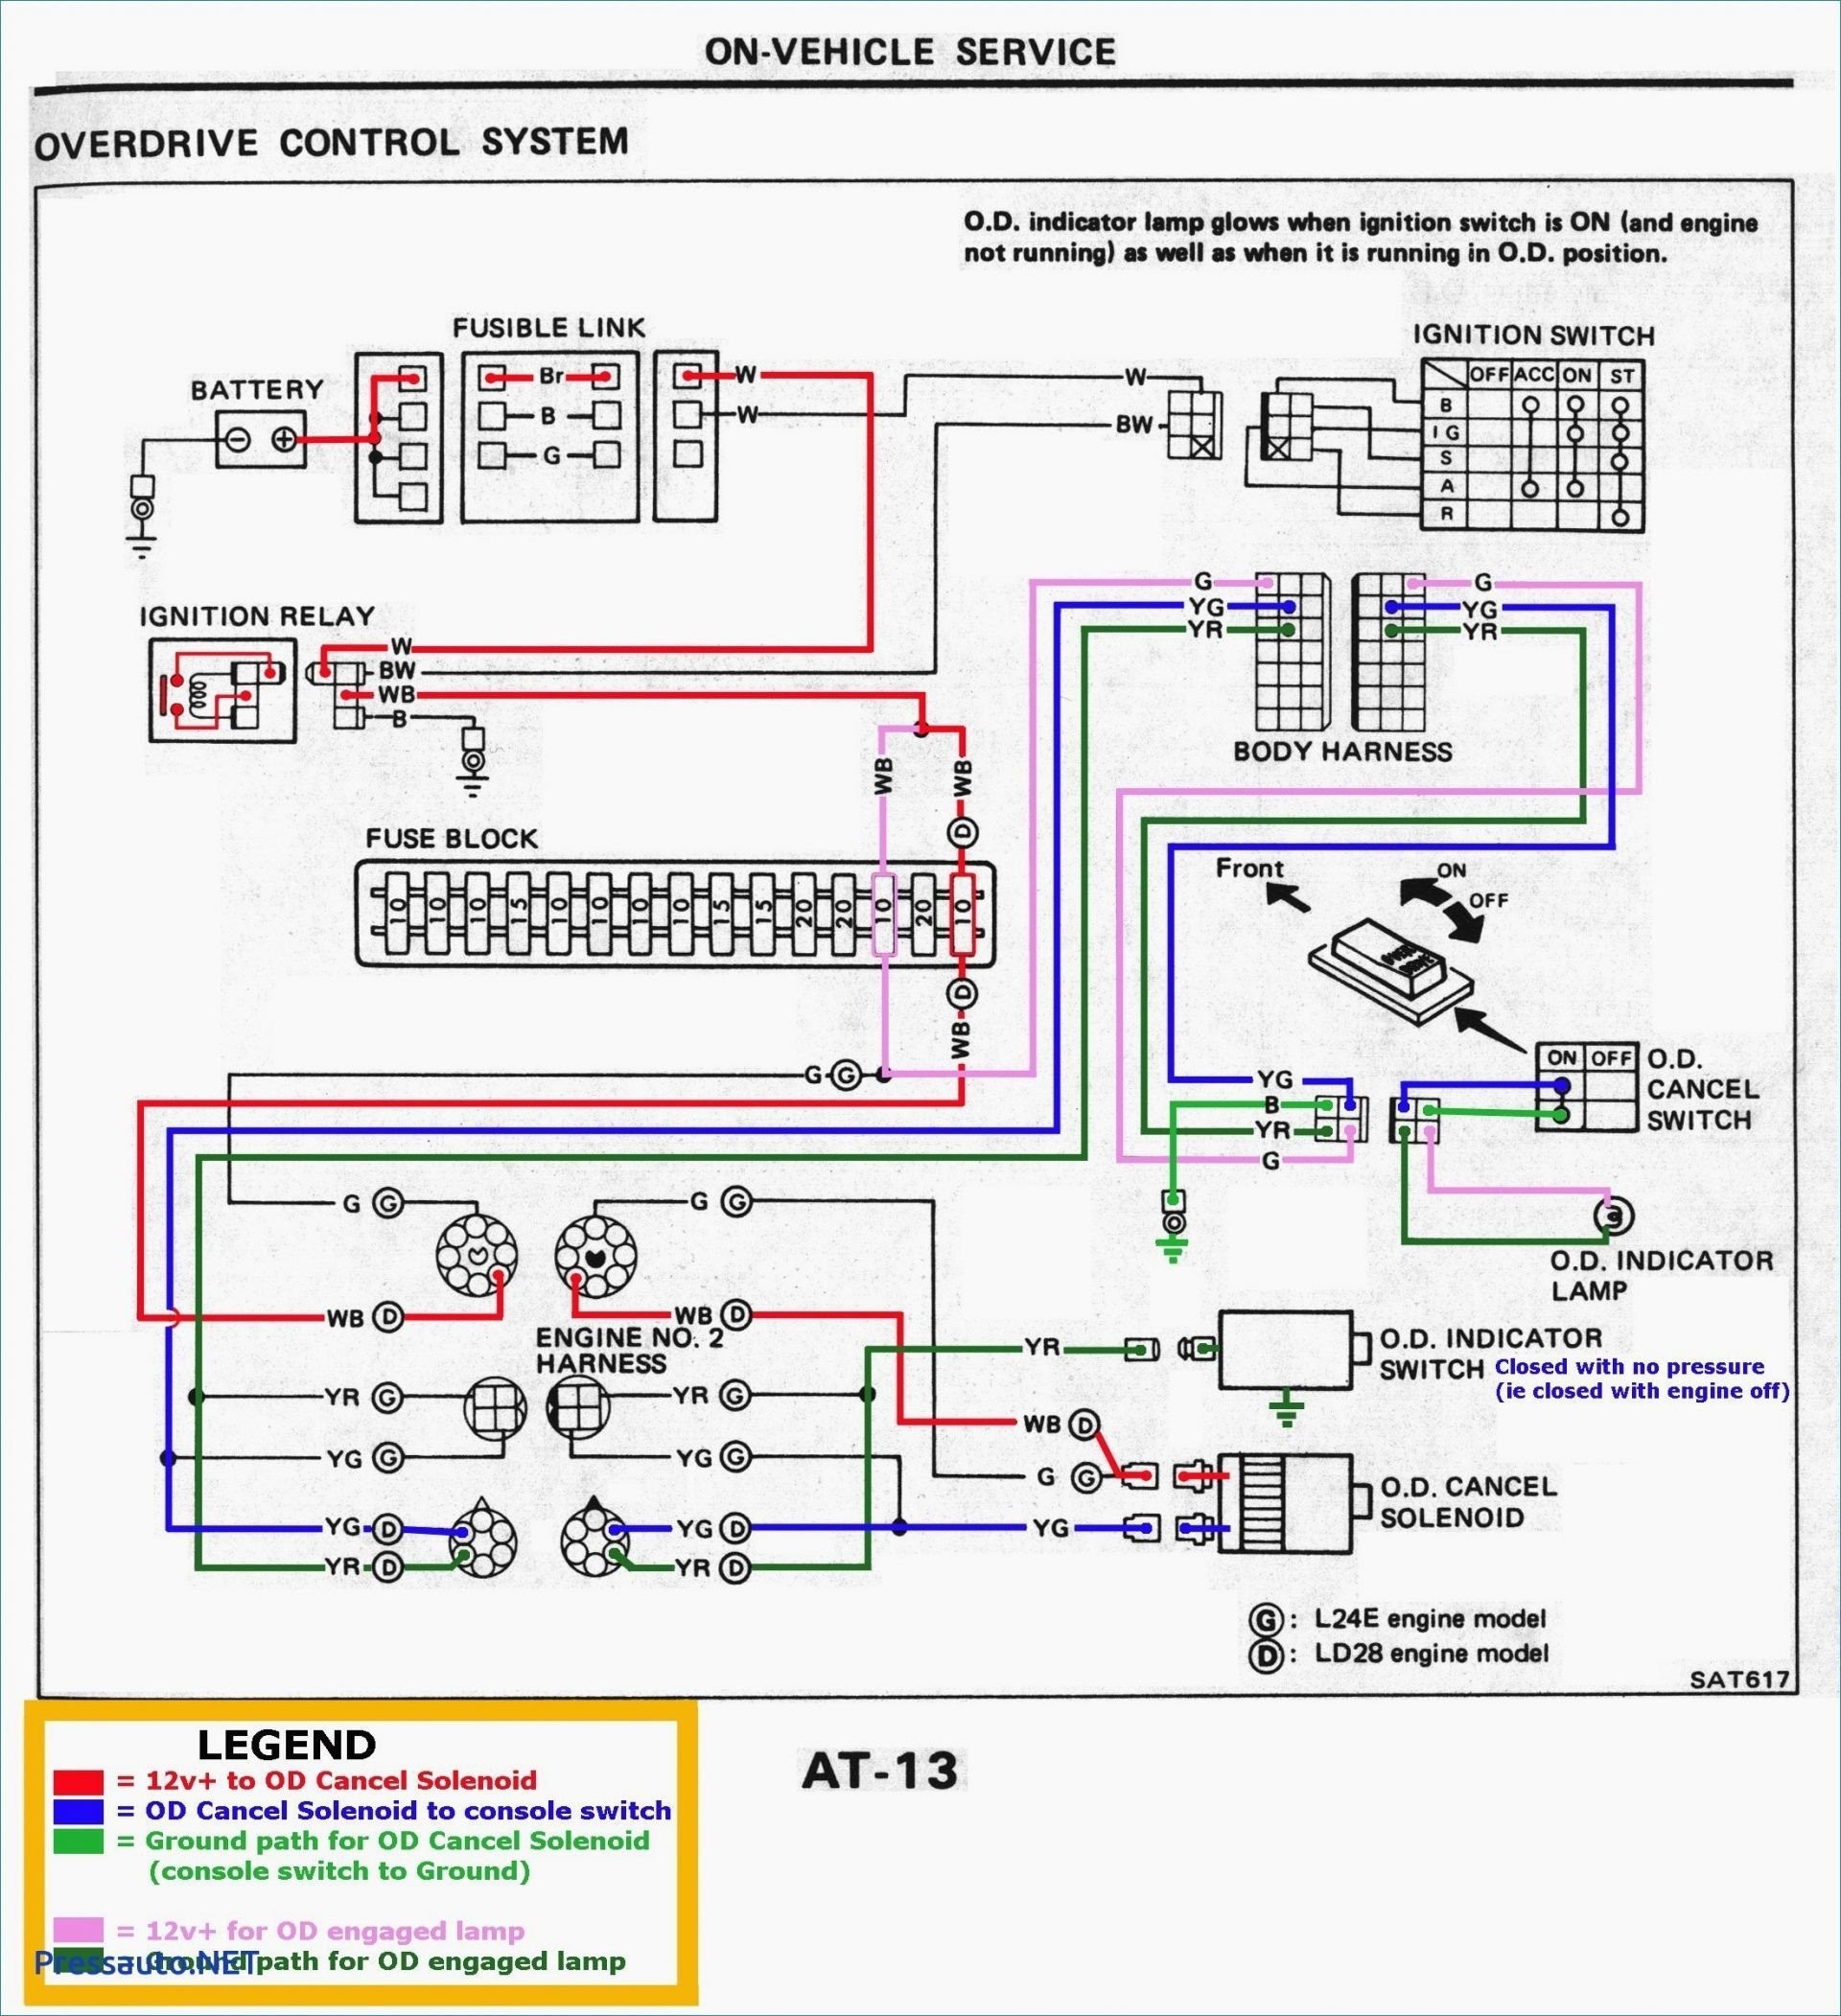 Breaker Box Wiring Diagram Breaker Box Wiring Diagram Luxury Wiring Diagram Electrical Panel Of Breaker Box Wiring Diagram